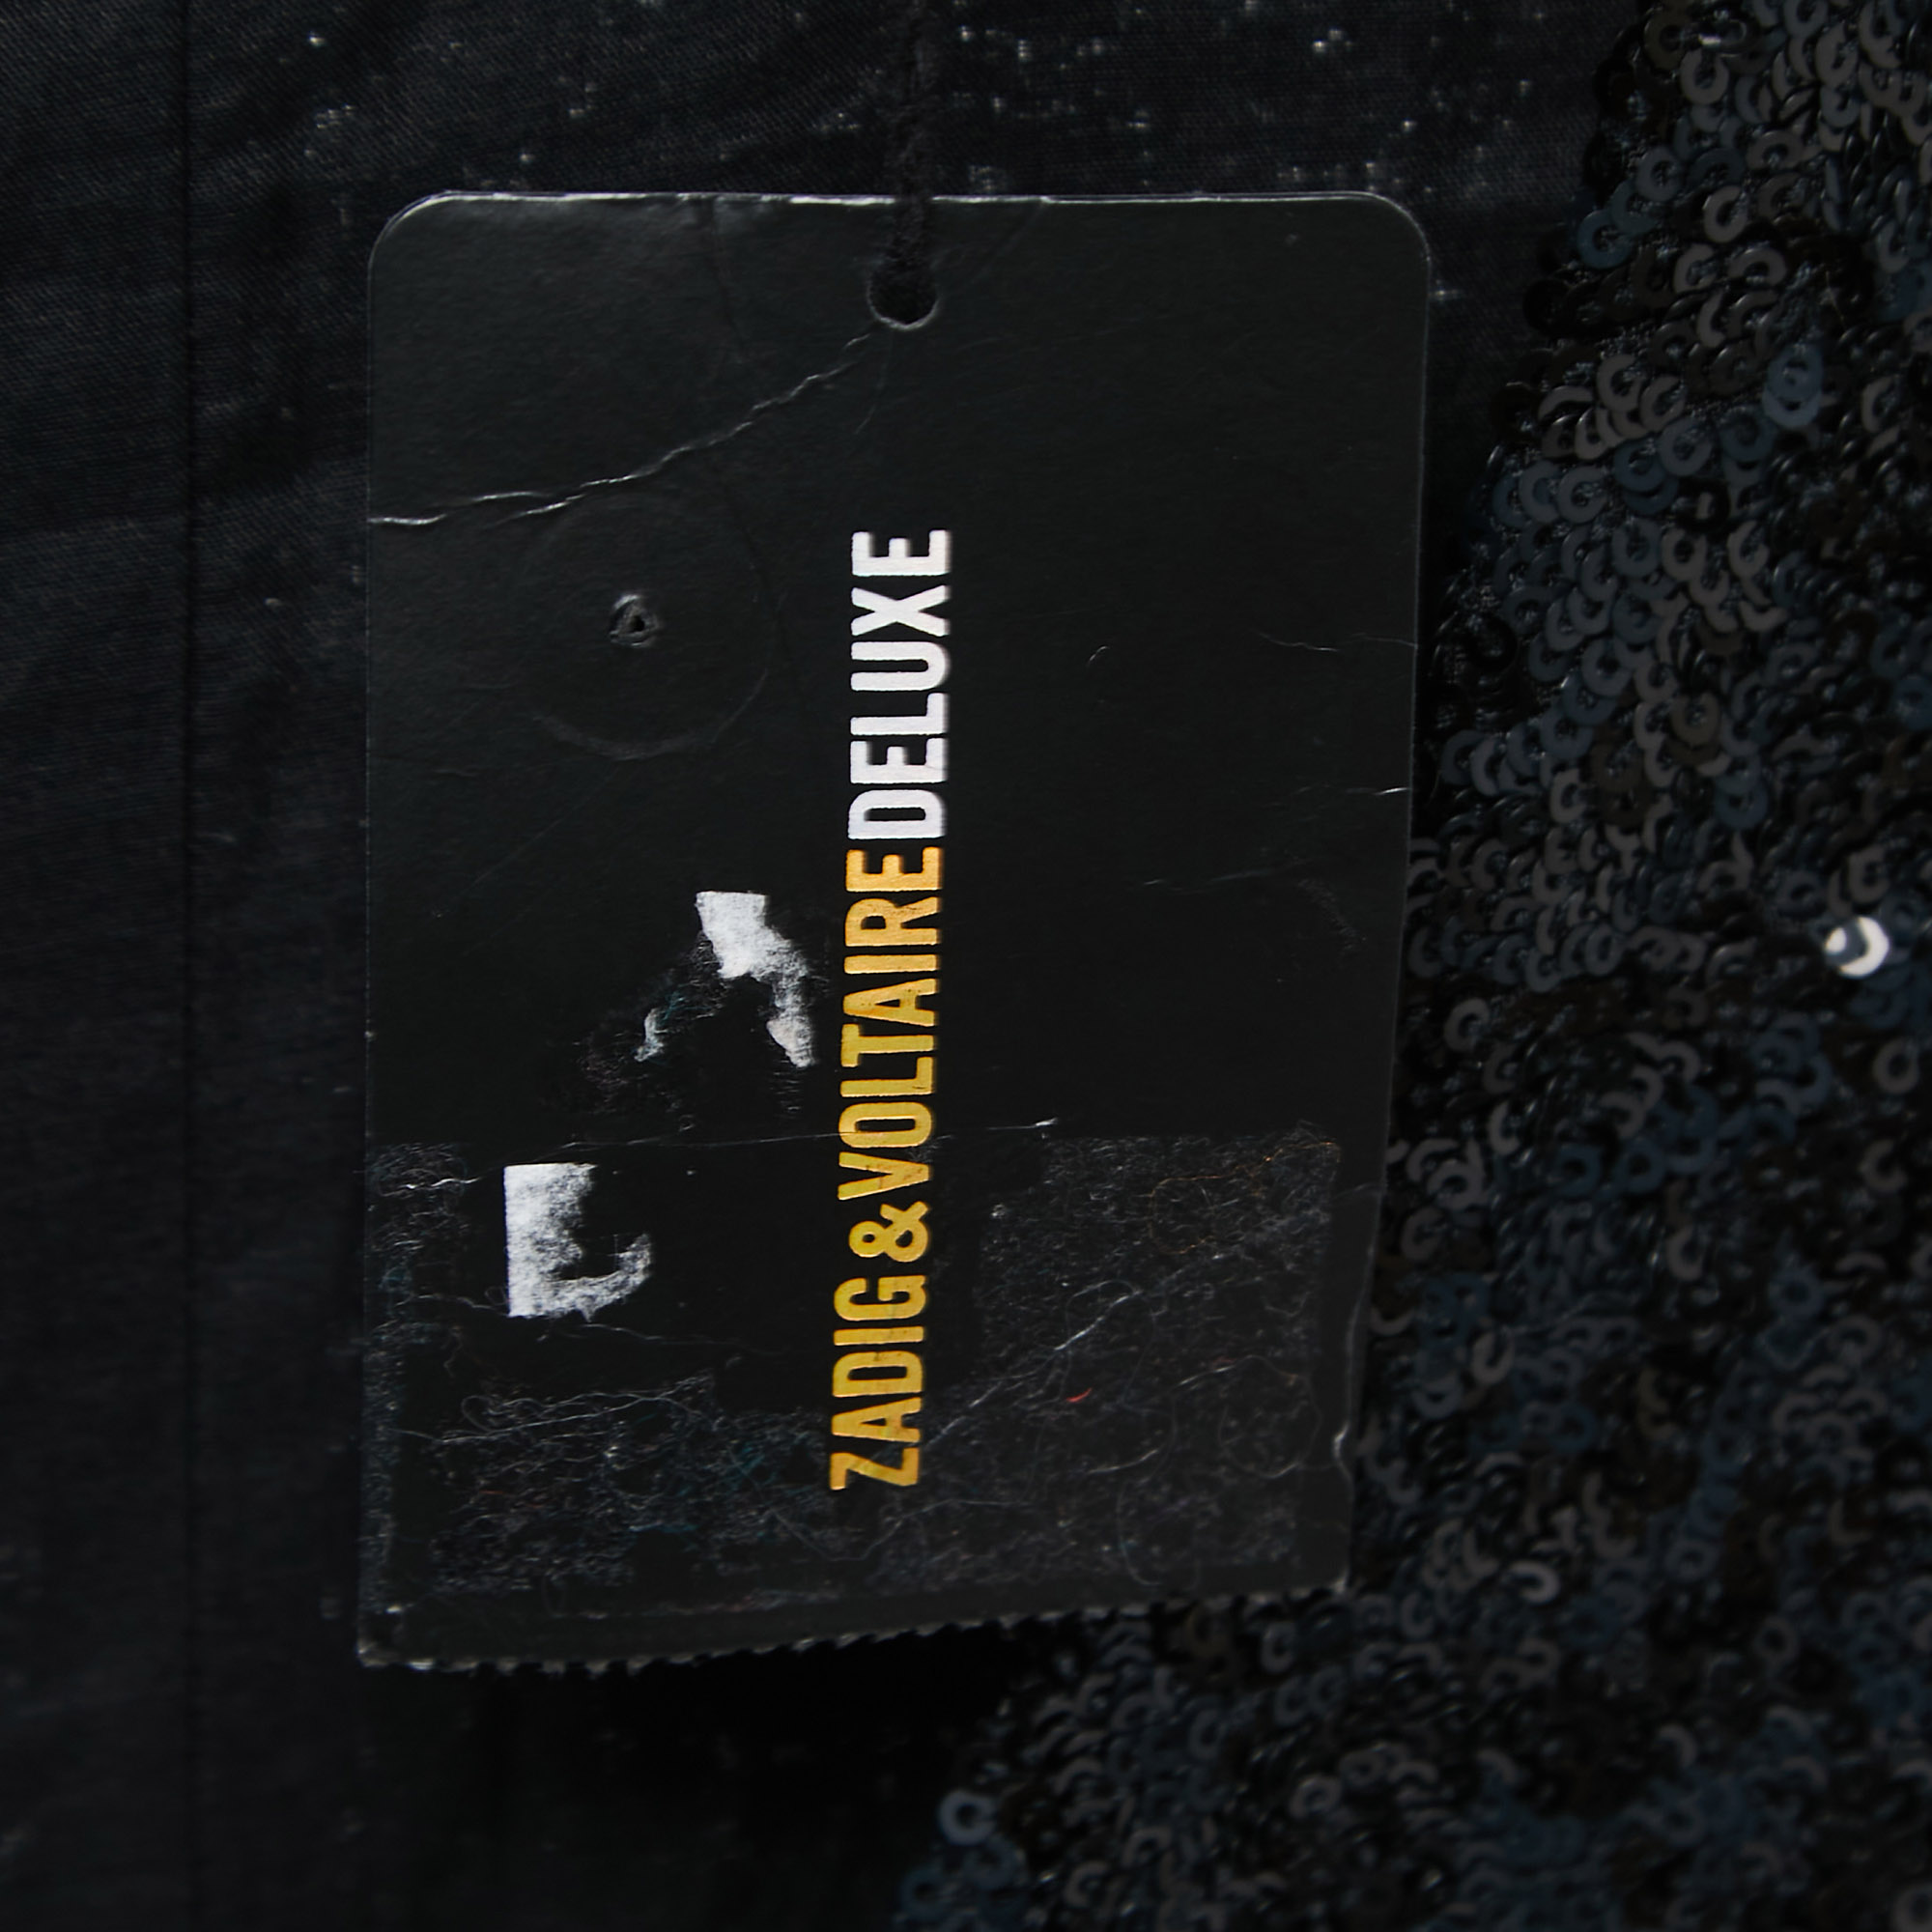 Zadig And Voltaire Deluxe Black Sequined Vest L